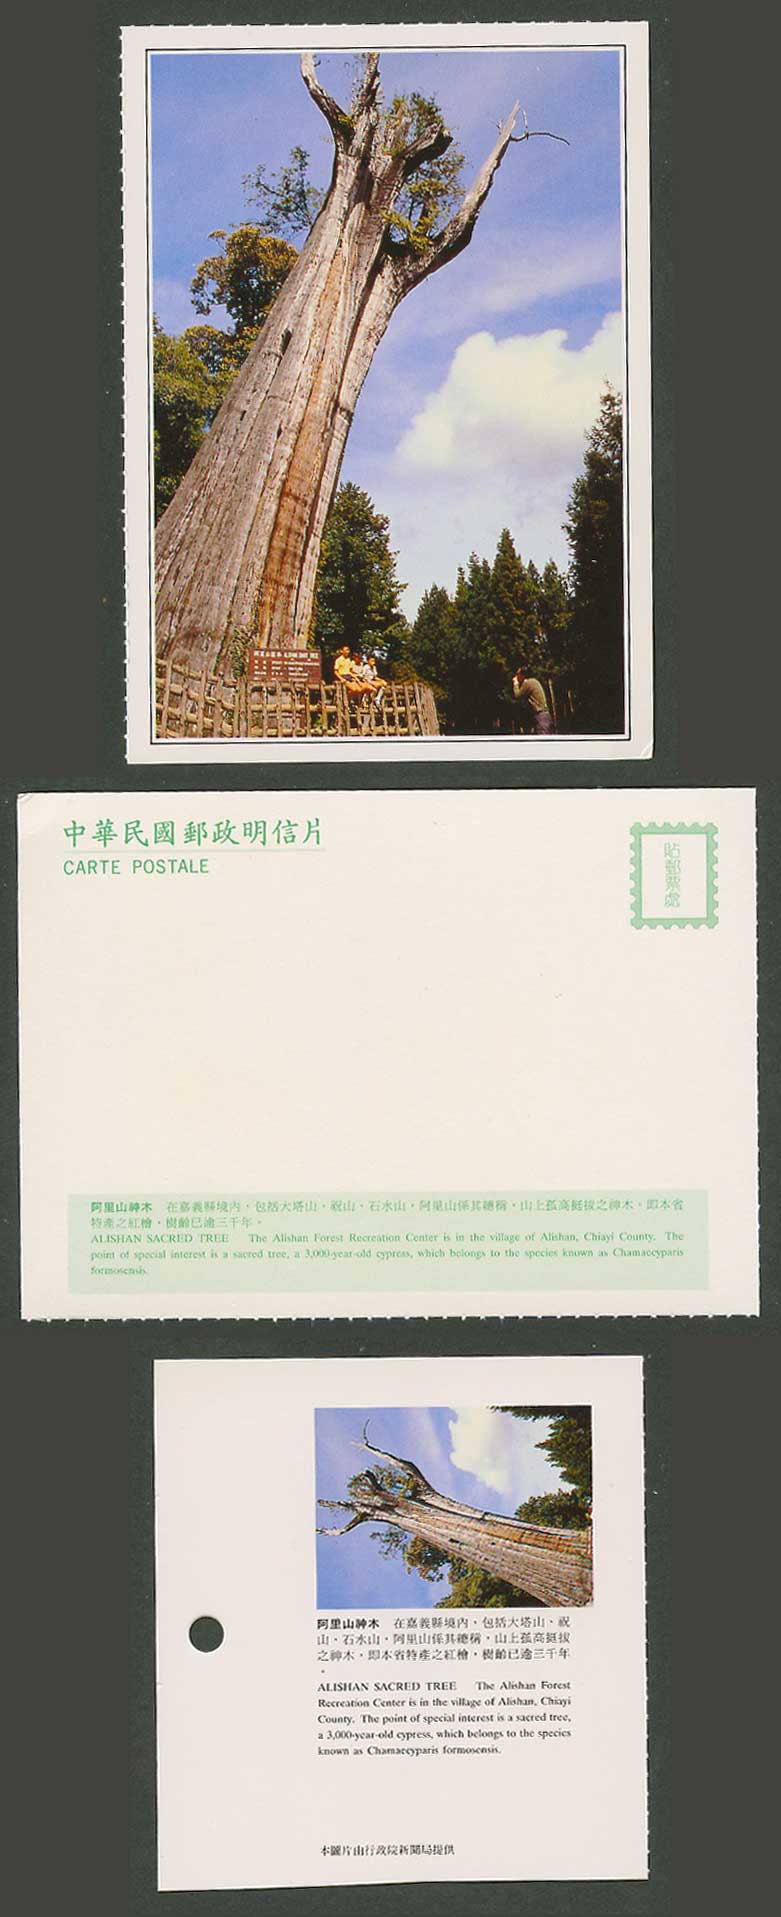 Taiwan Formosa China Postcard Chiayi, Alishan Sacred Tree 3,000 year-old 嘉義阿里山神木